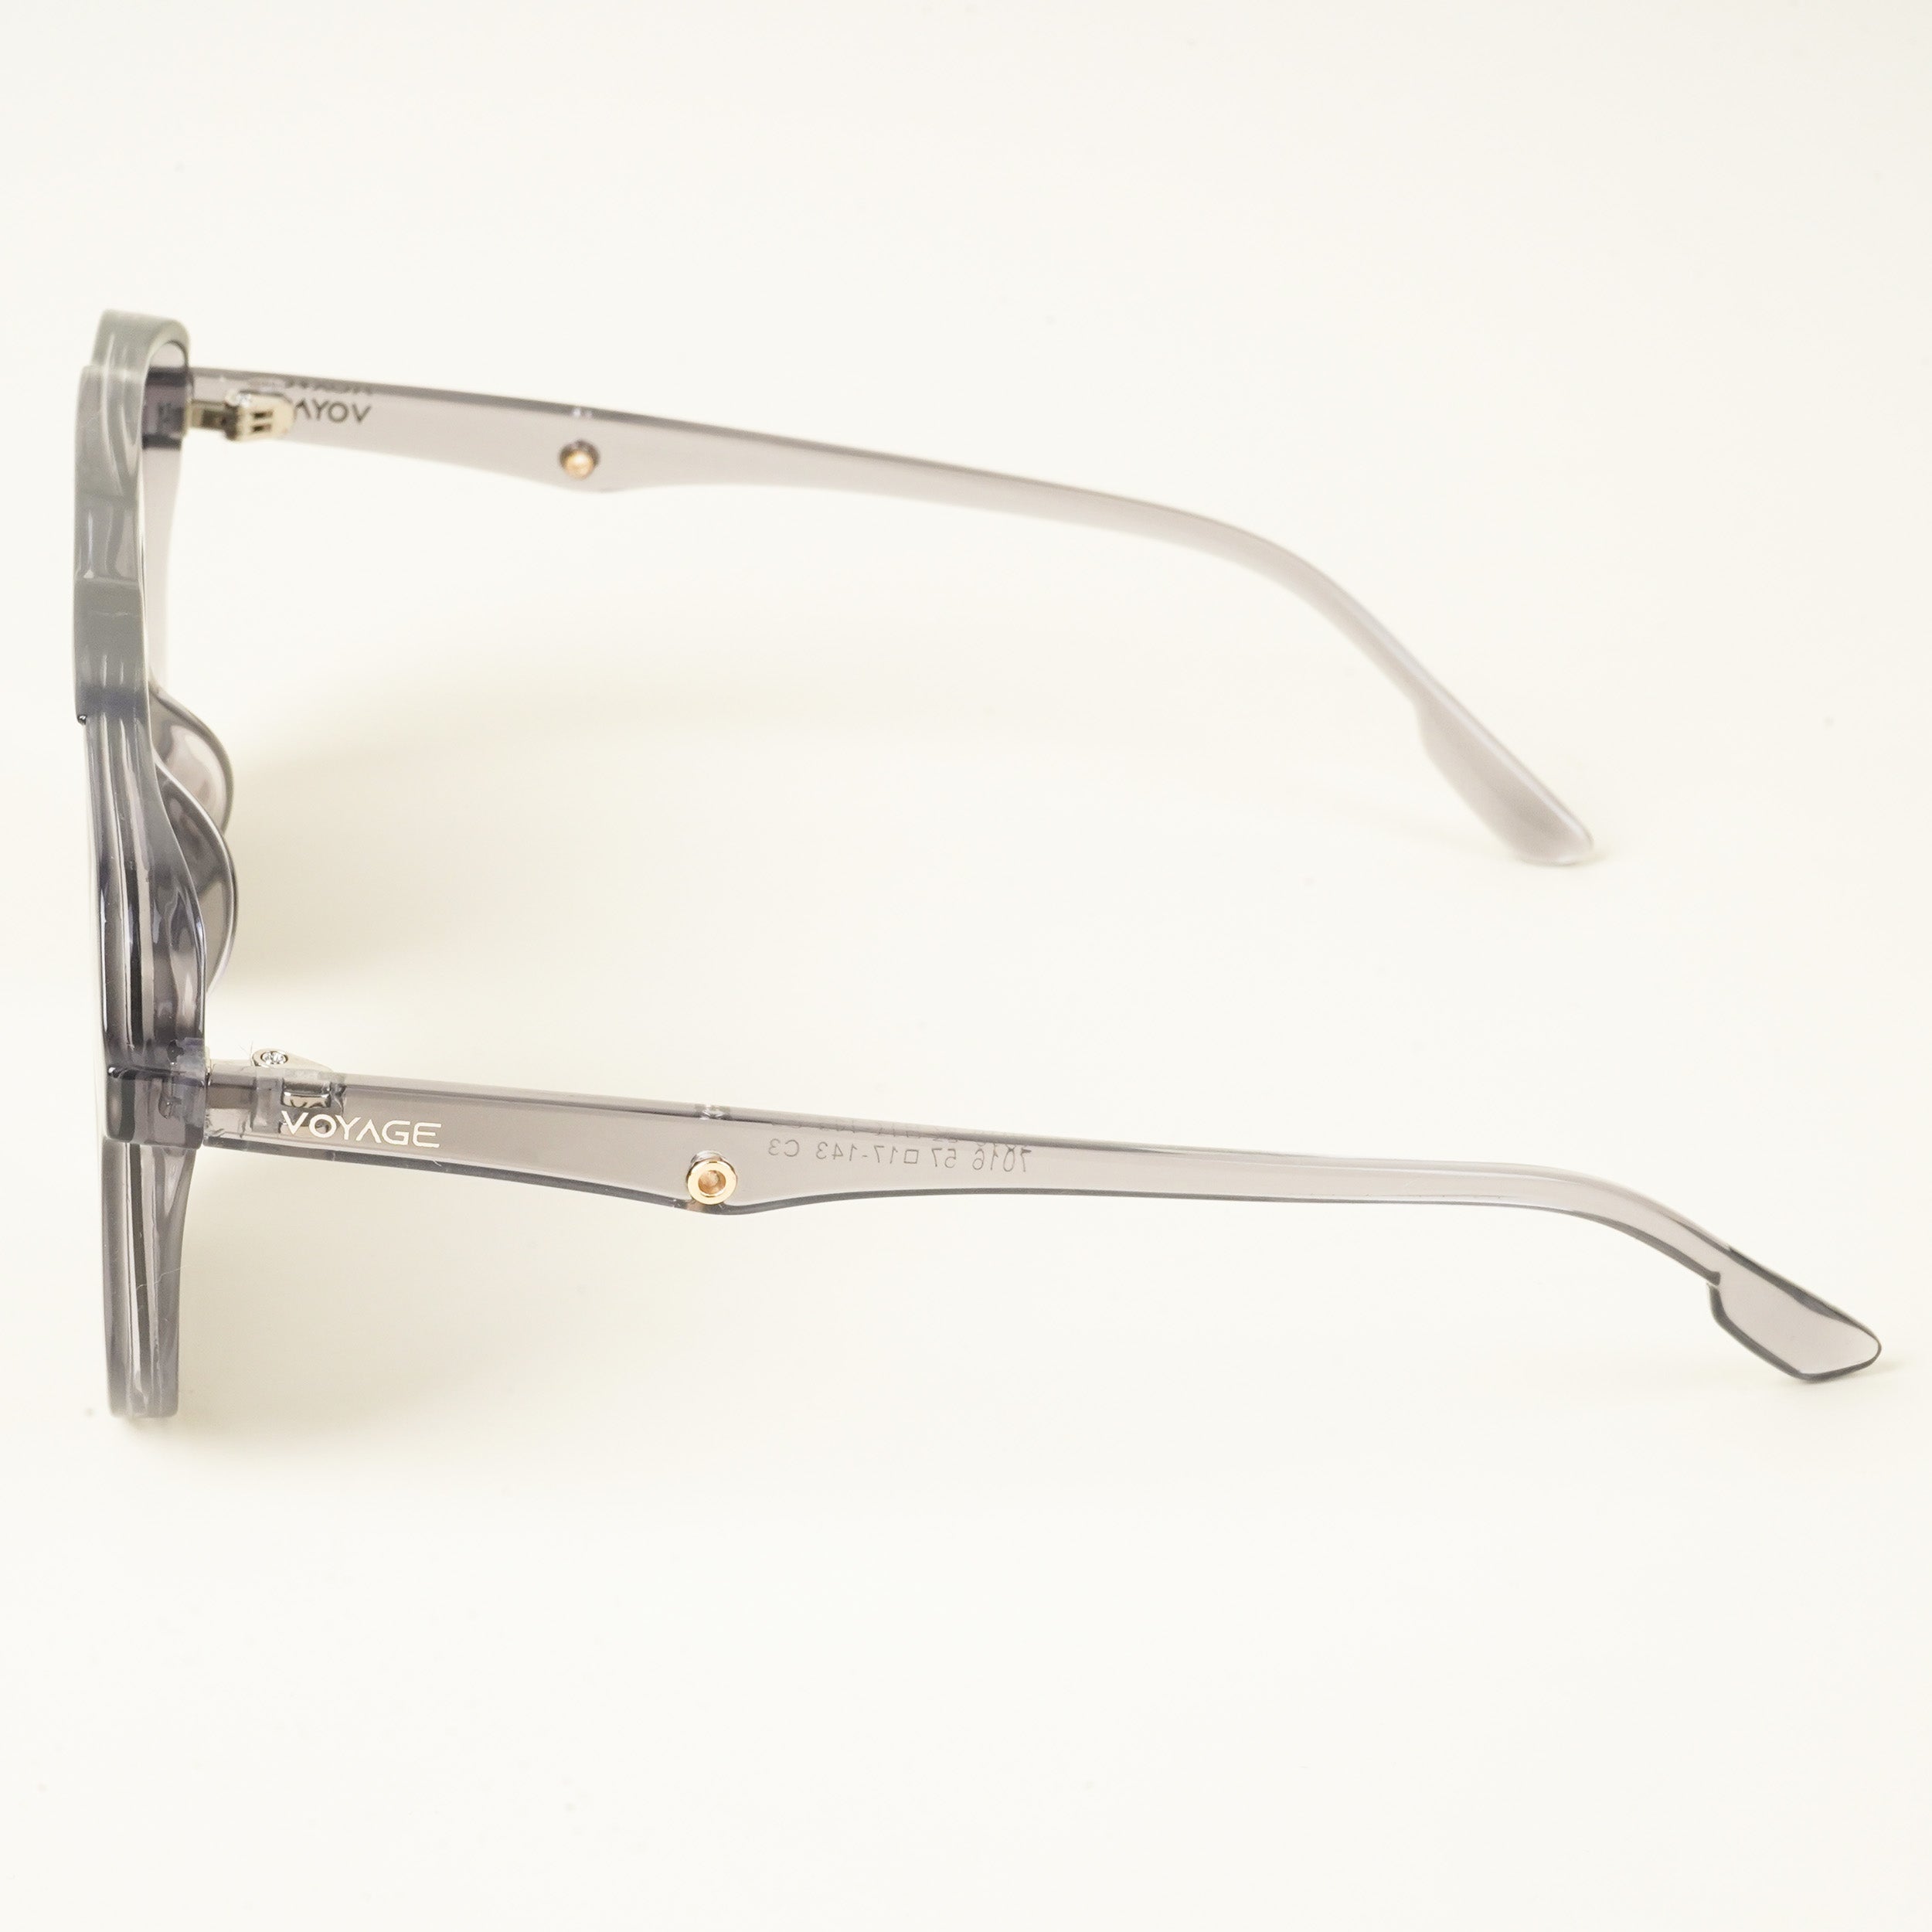 Voyage Wayfarer Polarized Sunglasses for Men & Women (Black Lens | Transparent Grey Frame - PMG5002)